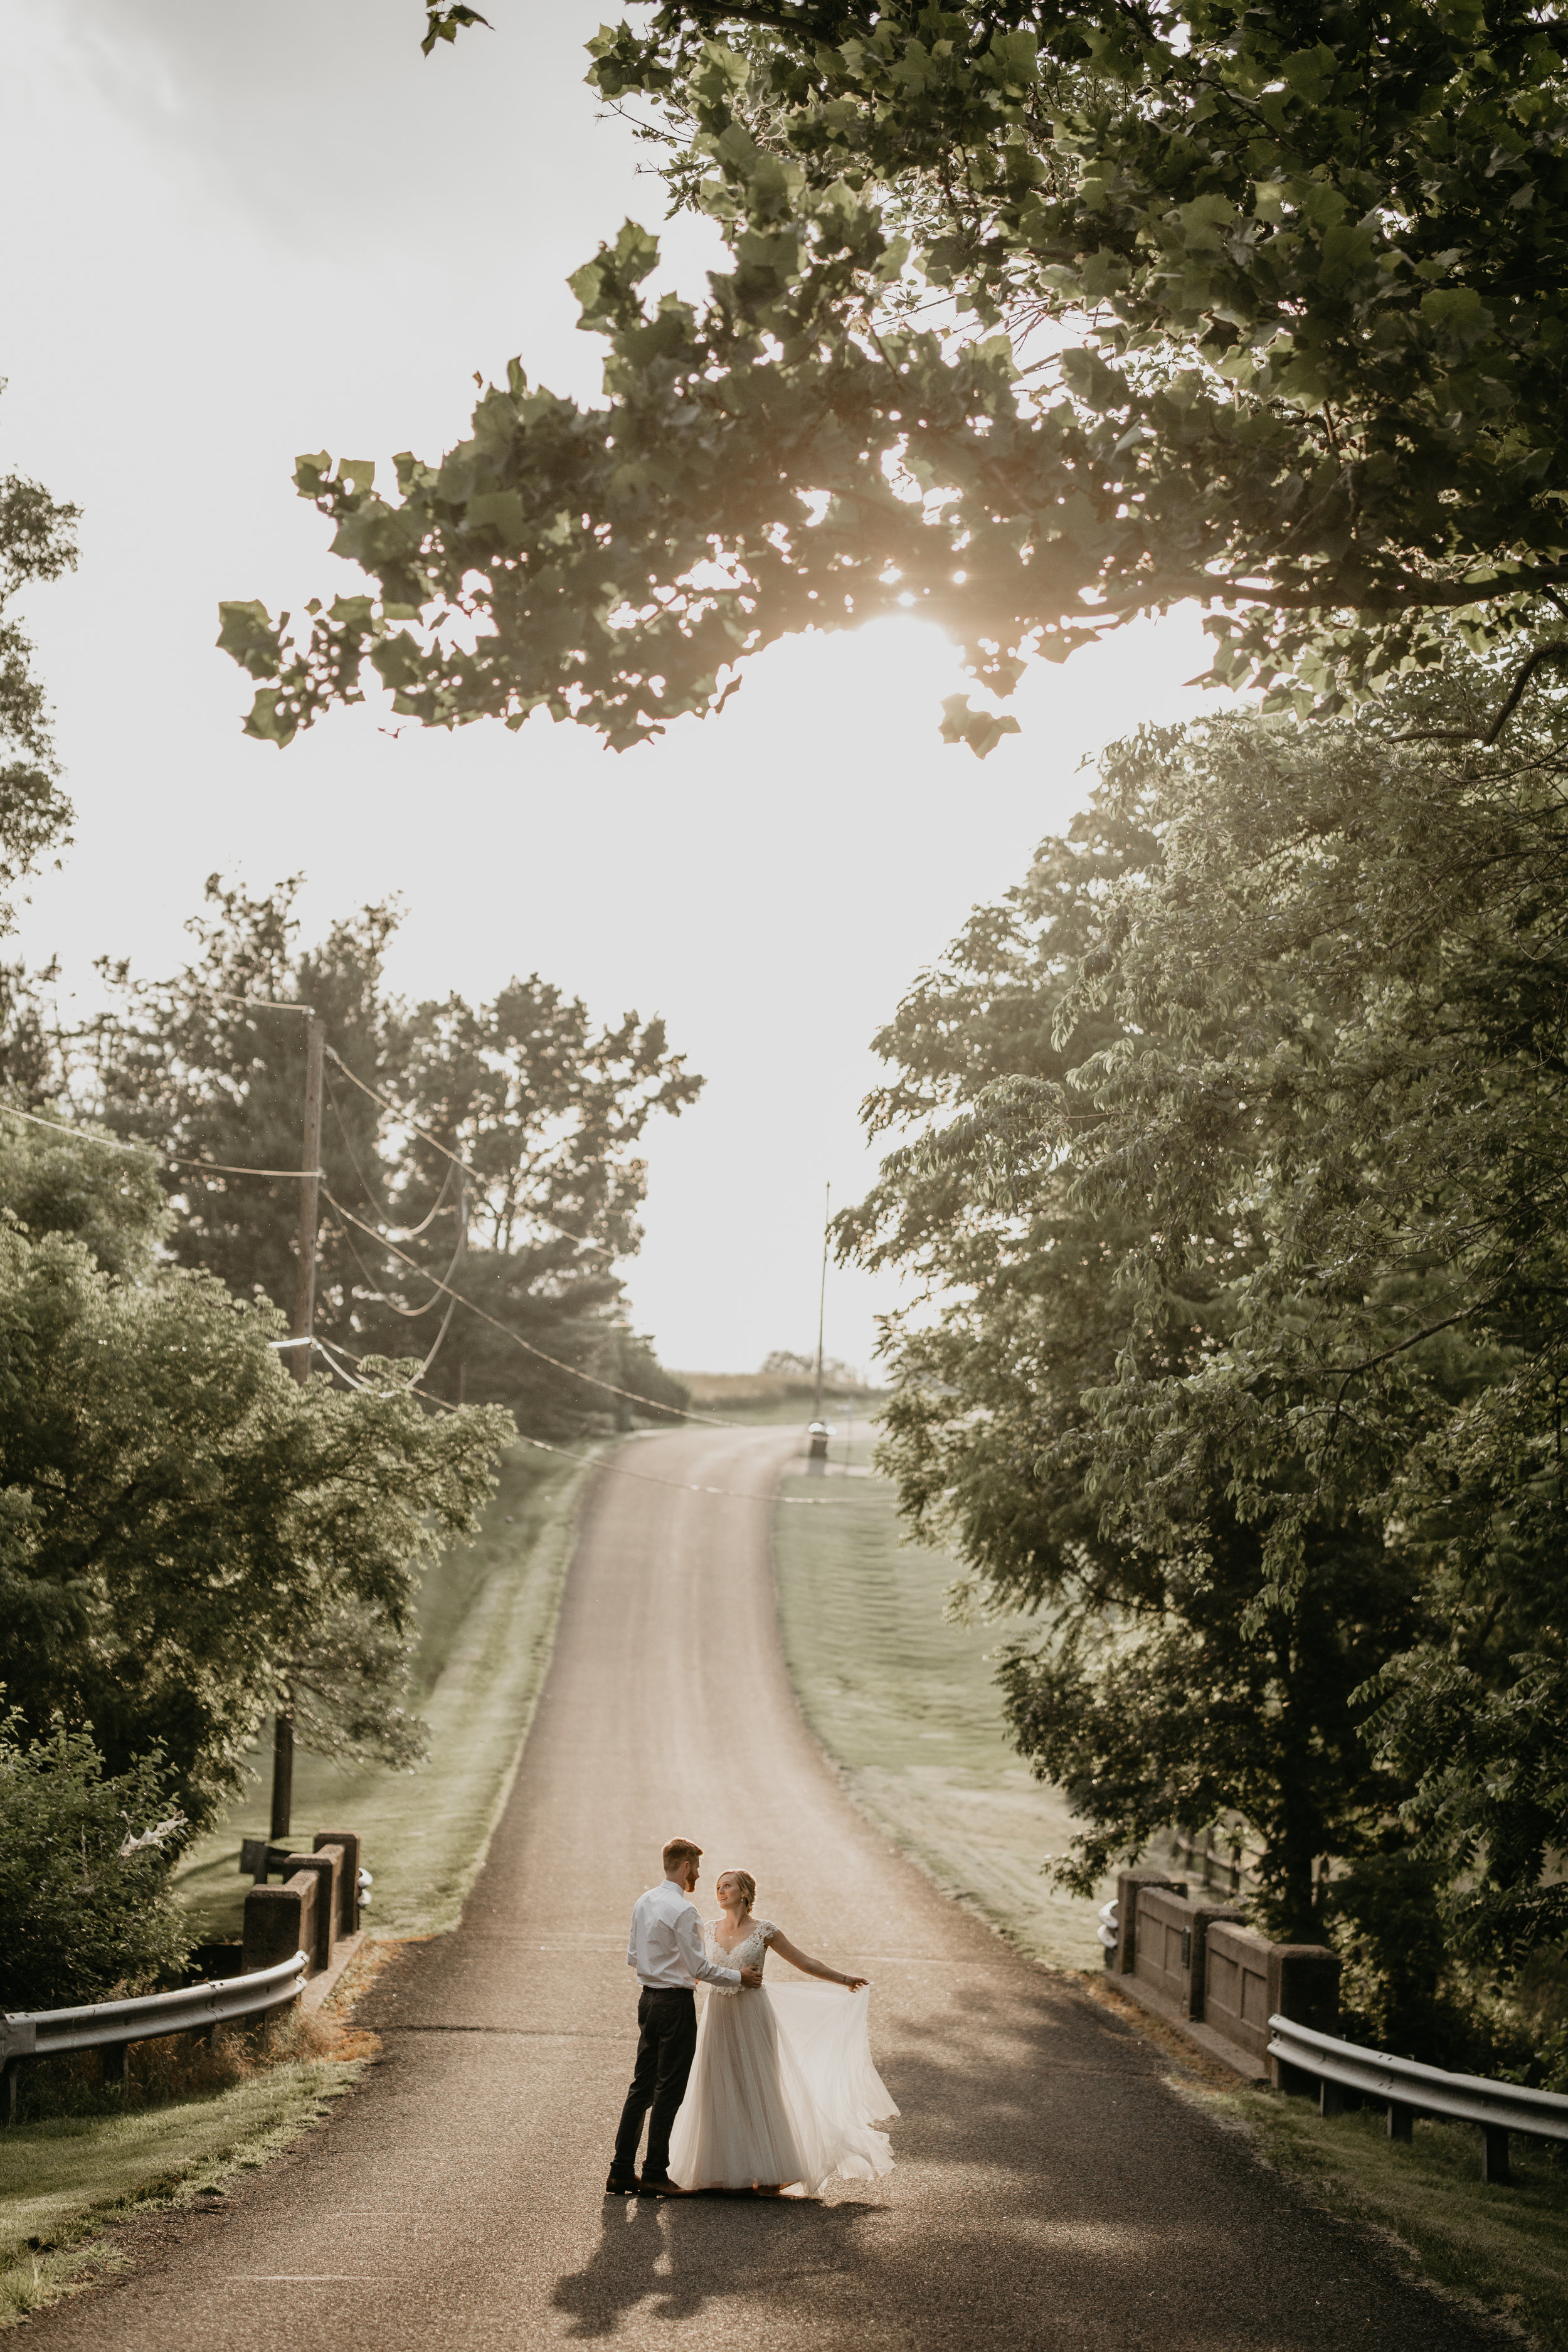 Nicole-Daacke-Photography-pennsylvania-laid-back-outside-backyard-wedding-family-summer-june-maryland-barefoot-bride-woodland-trees-sunset-couple-75.jpg